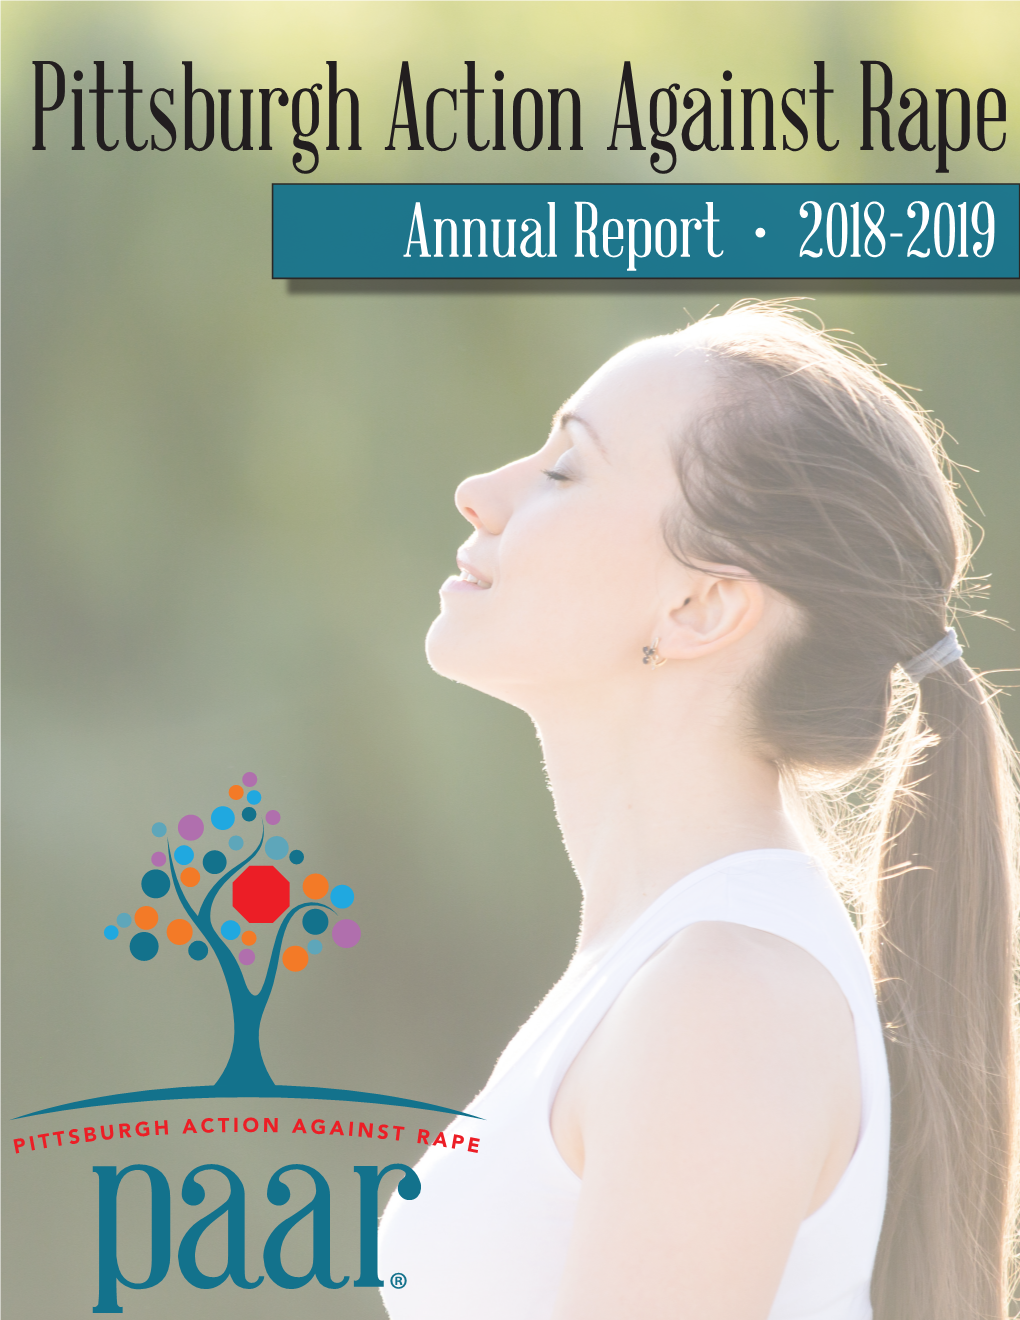 Annual Report • 2018-2019